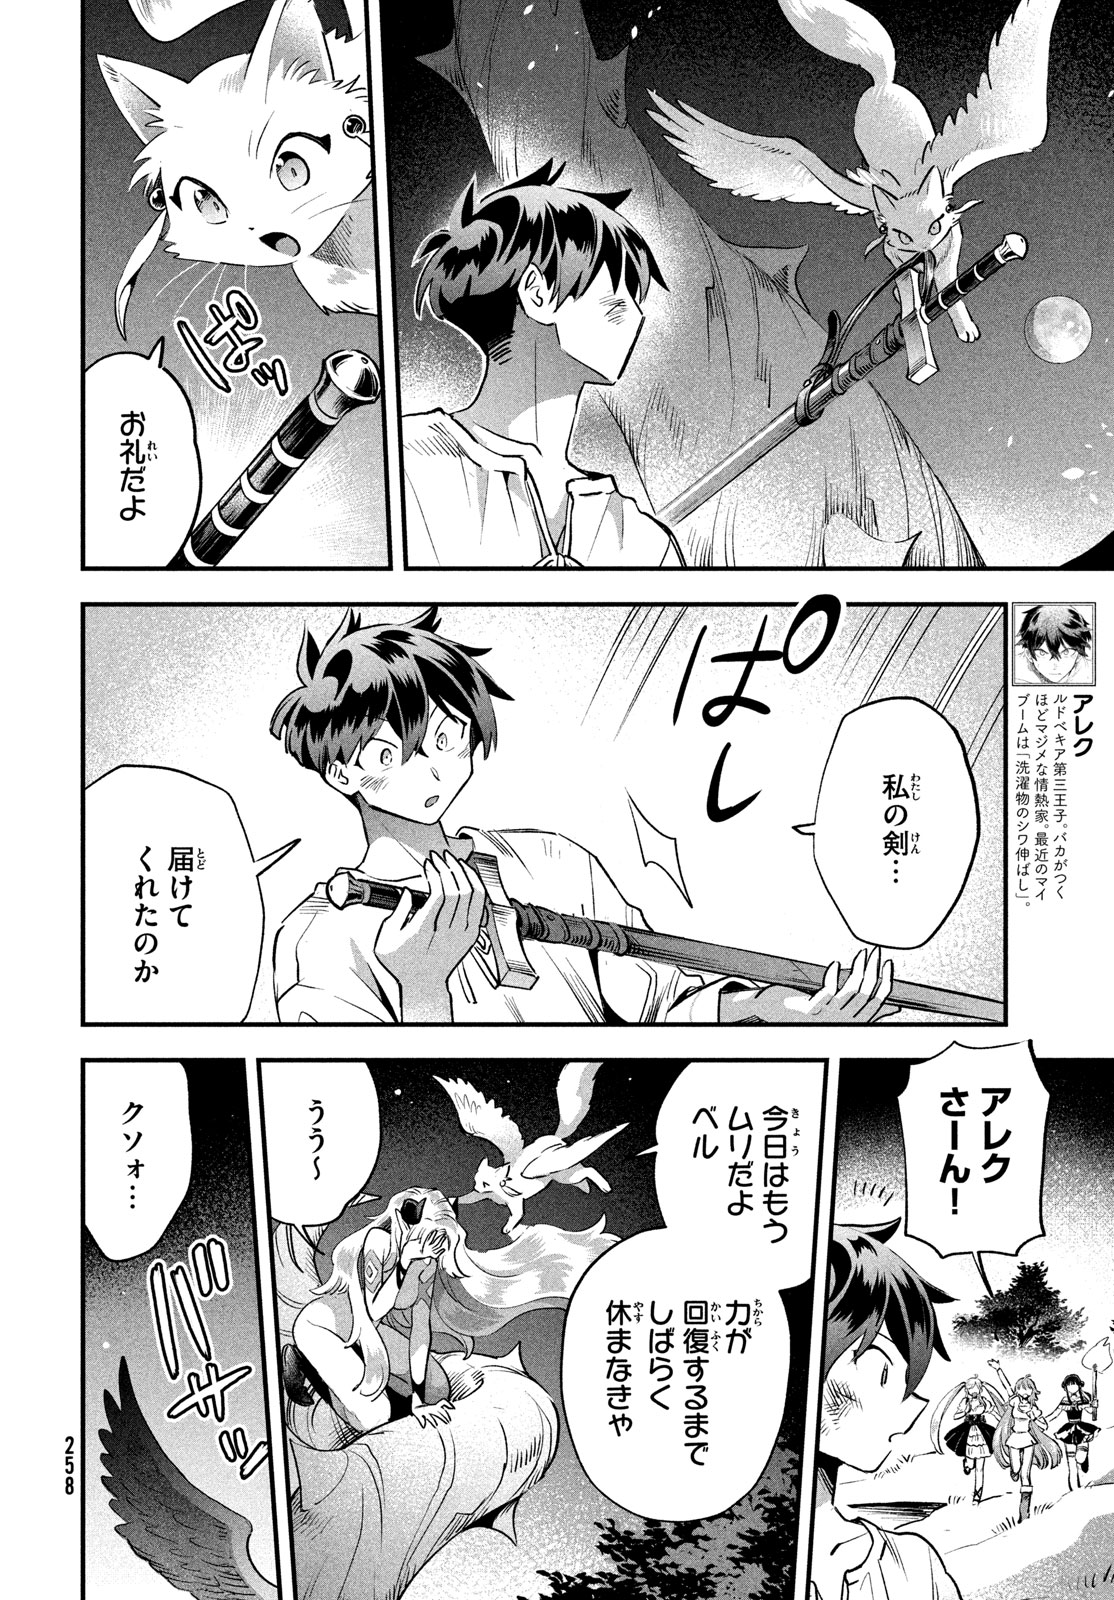 7-nin no Nemuri Hime - Chapter 48 - Page 4